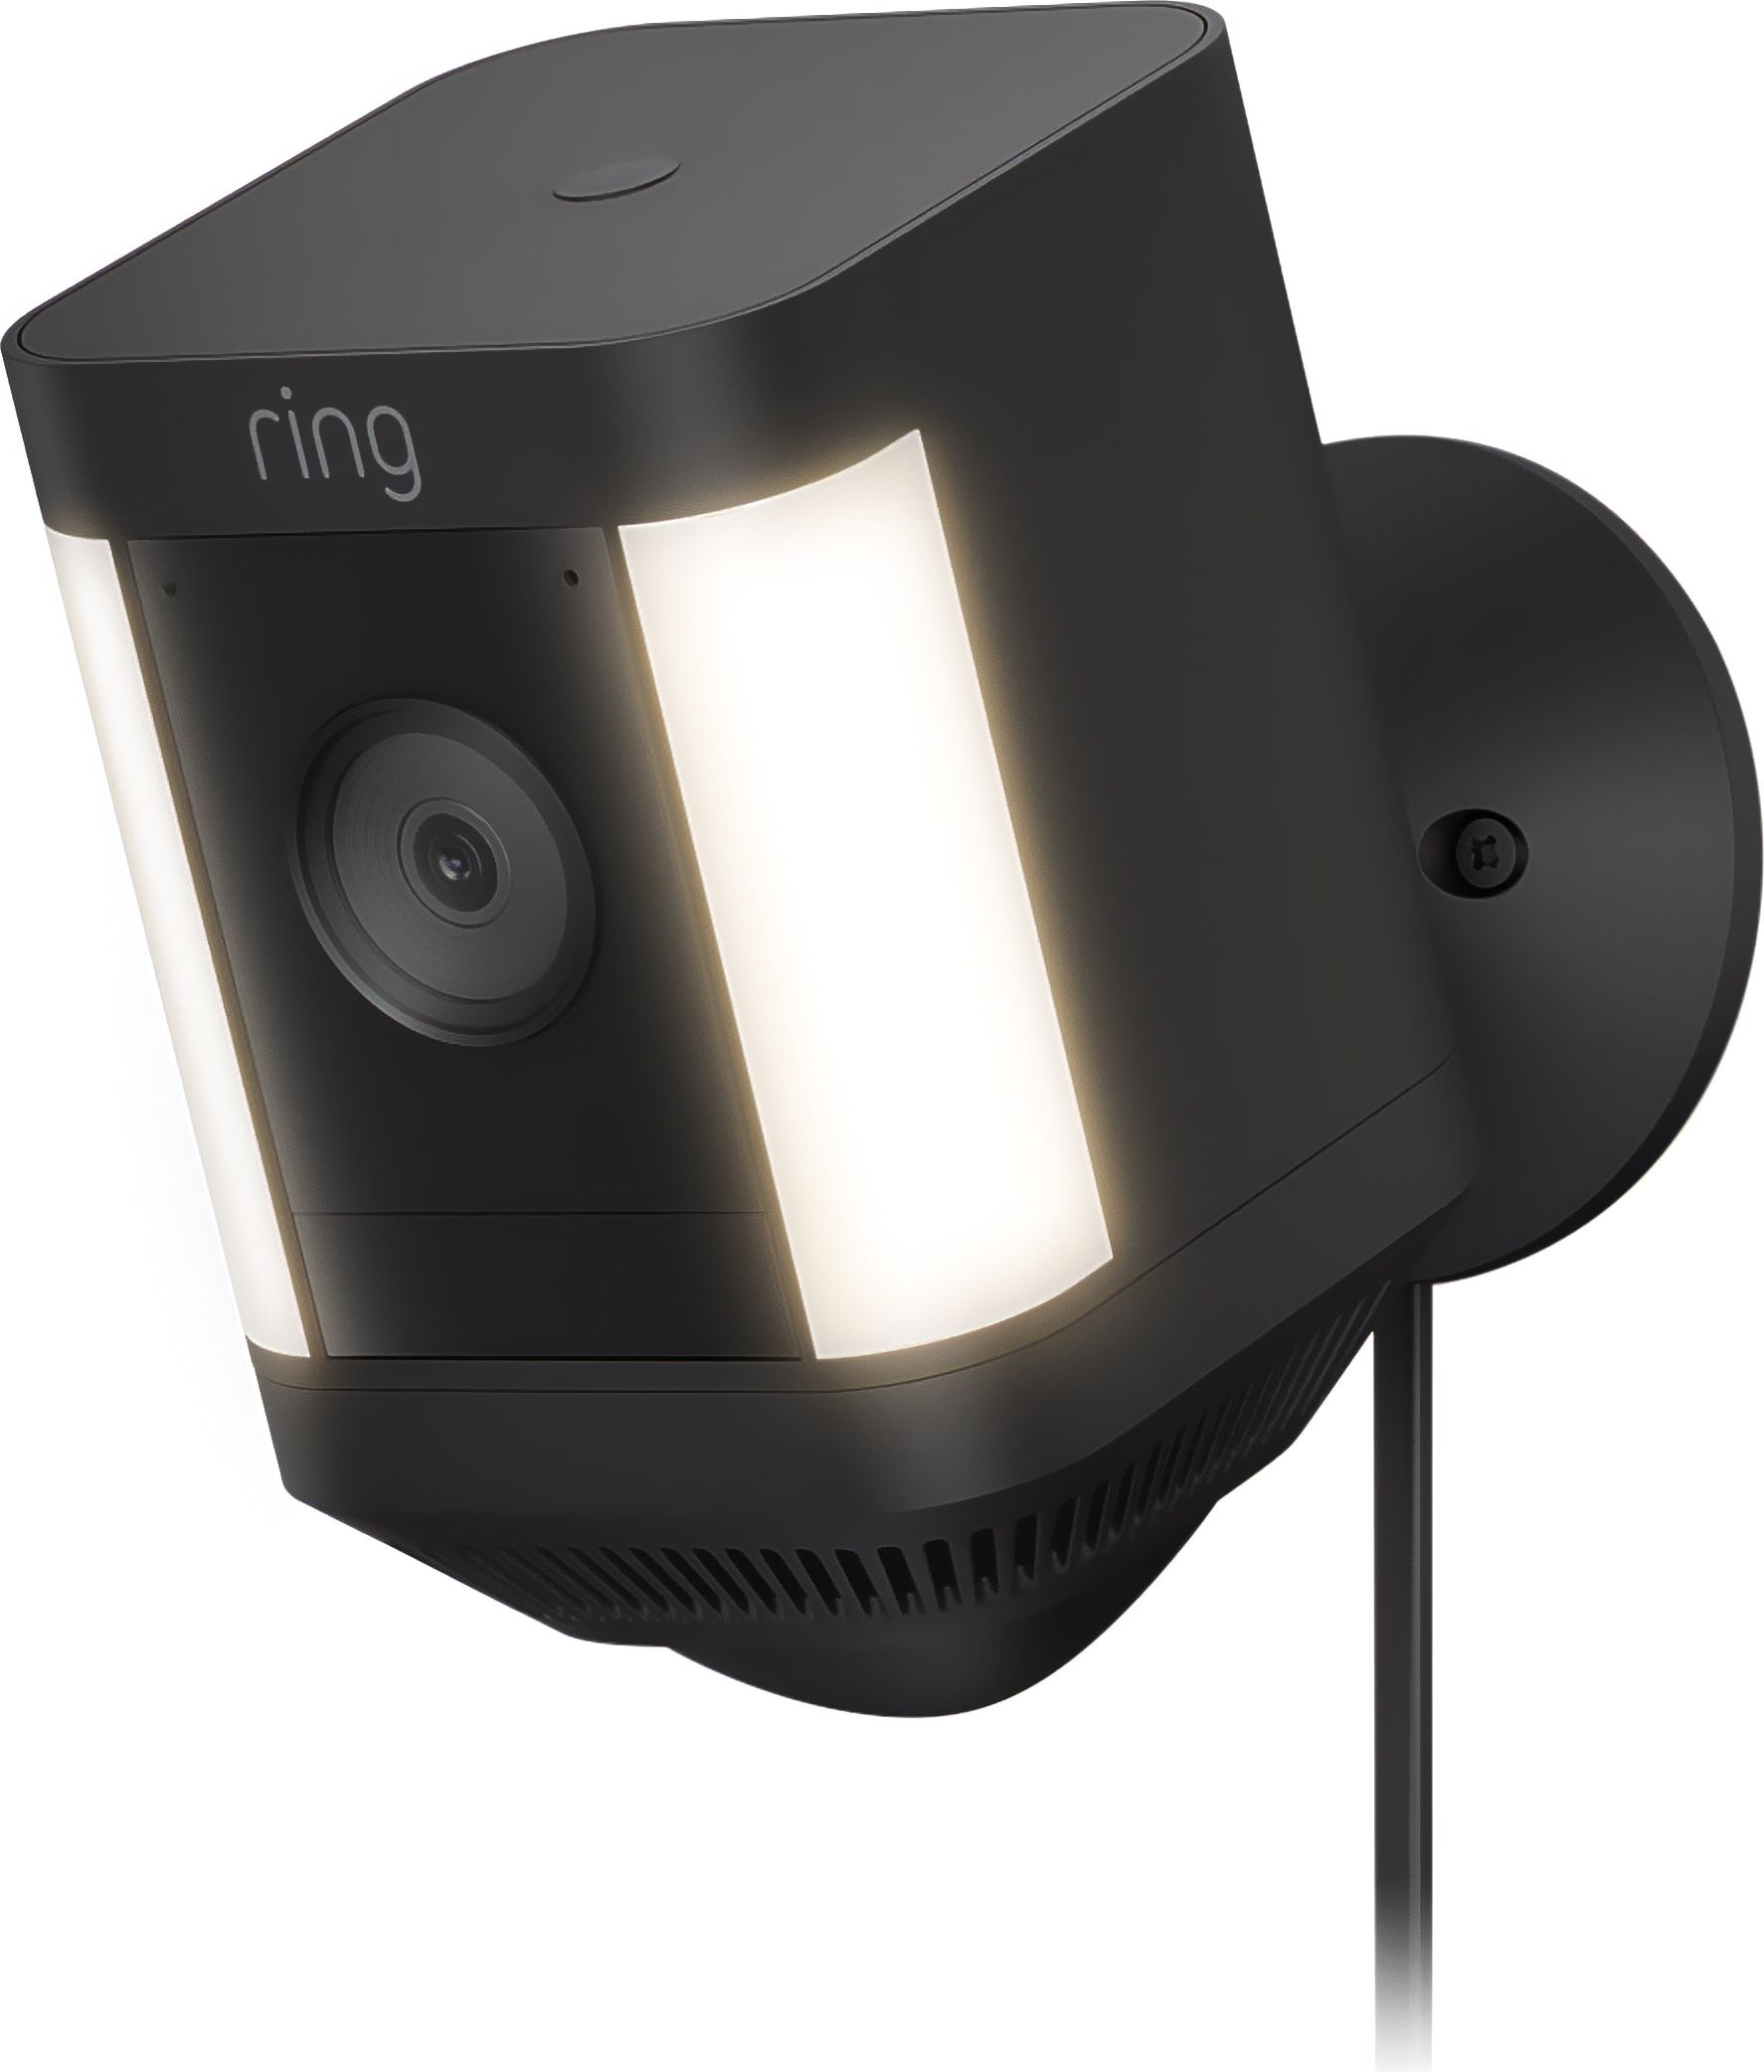 Ring Plug-In Spotlight Cam Plus Full HD 1080p Smart Home Security Camera - Black, Black